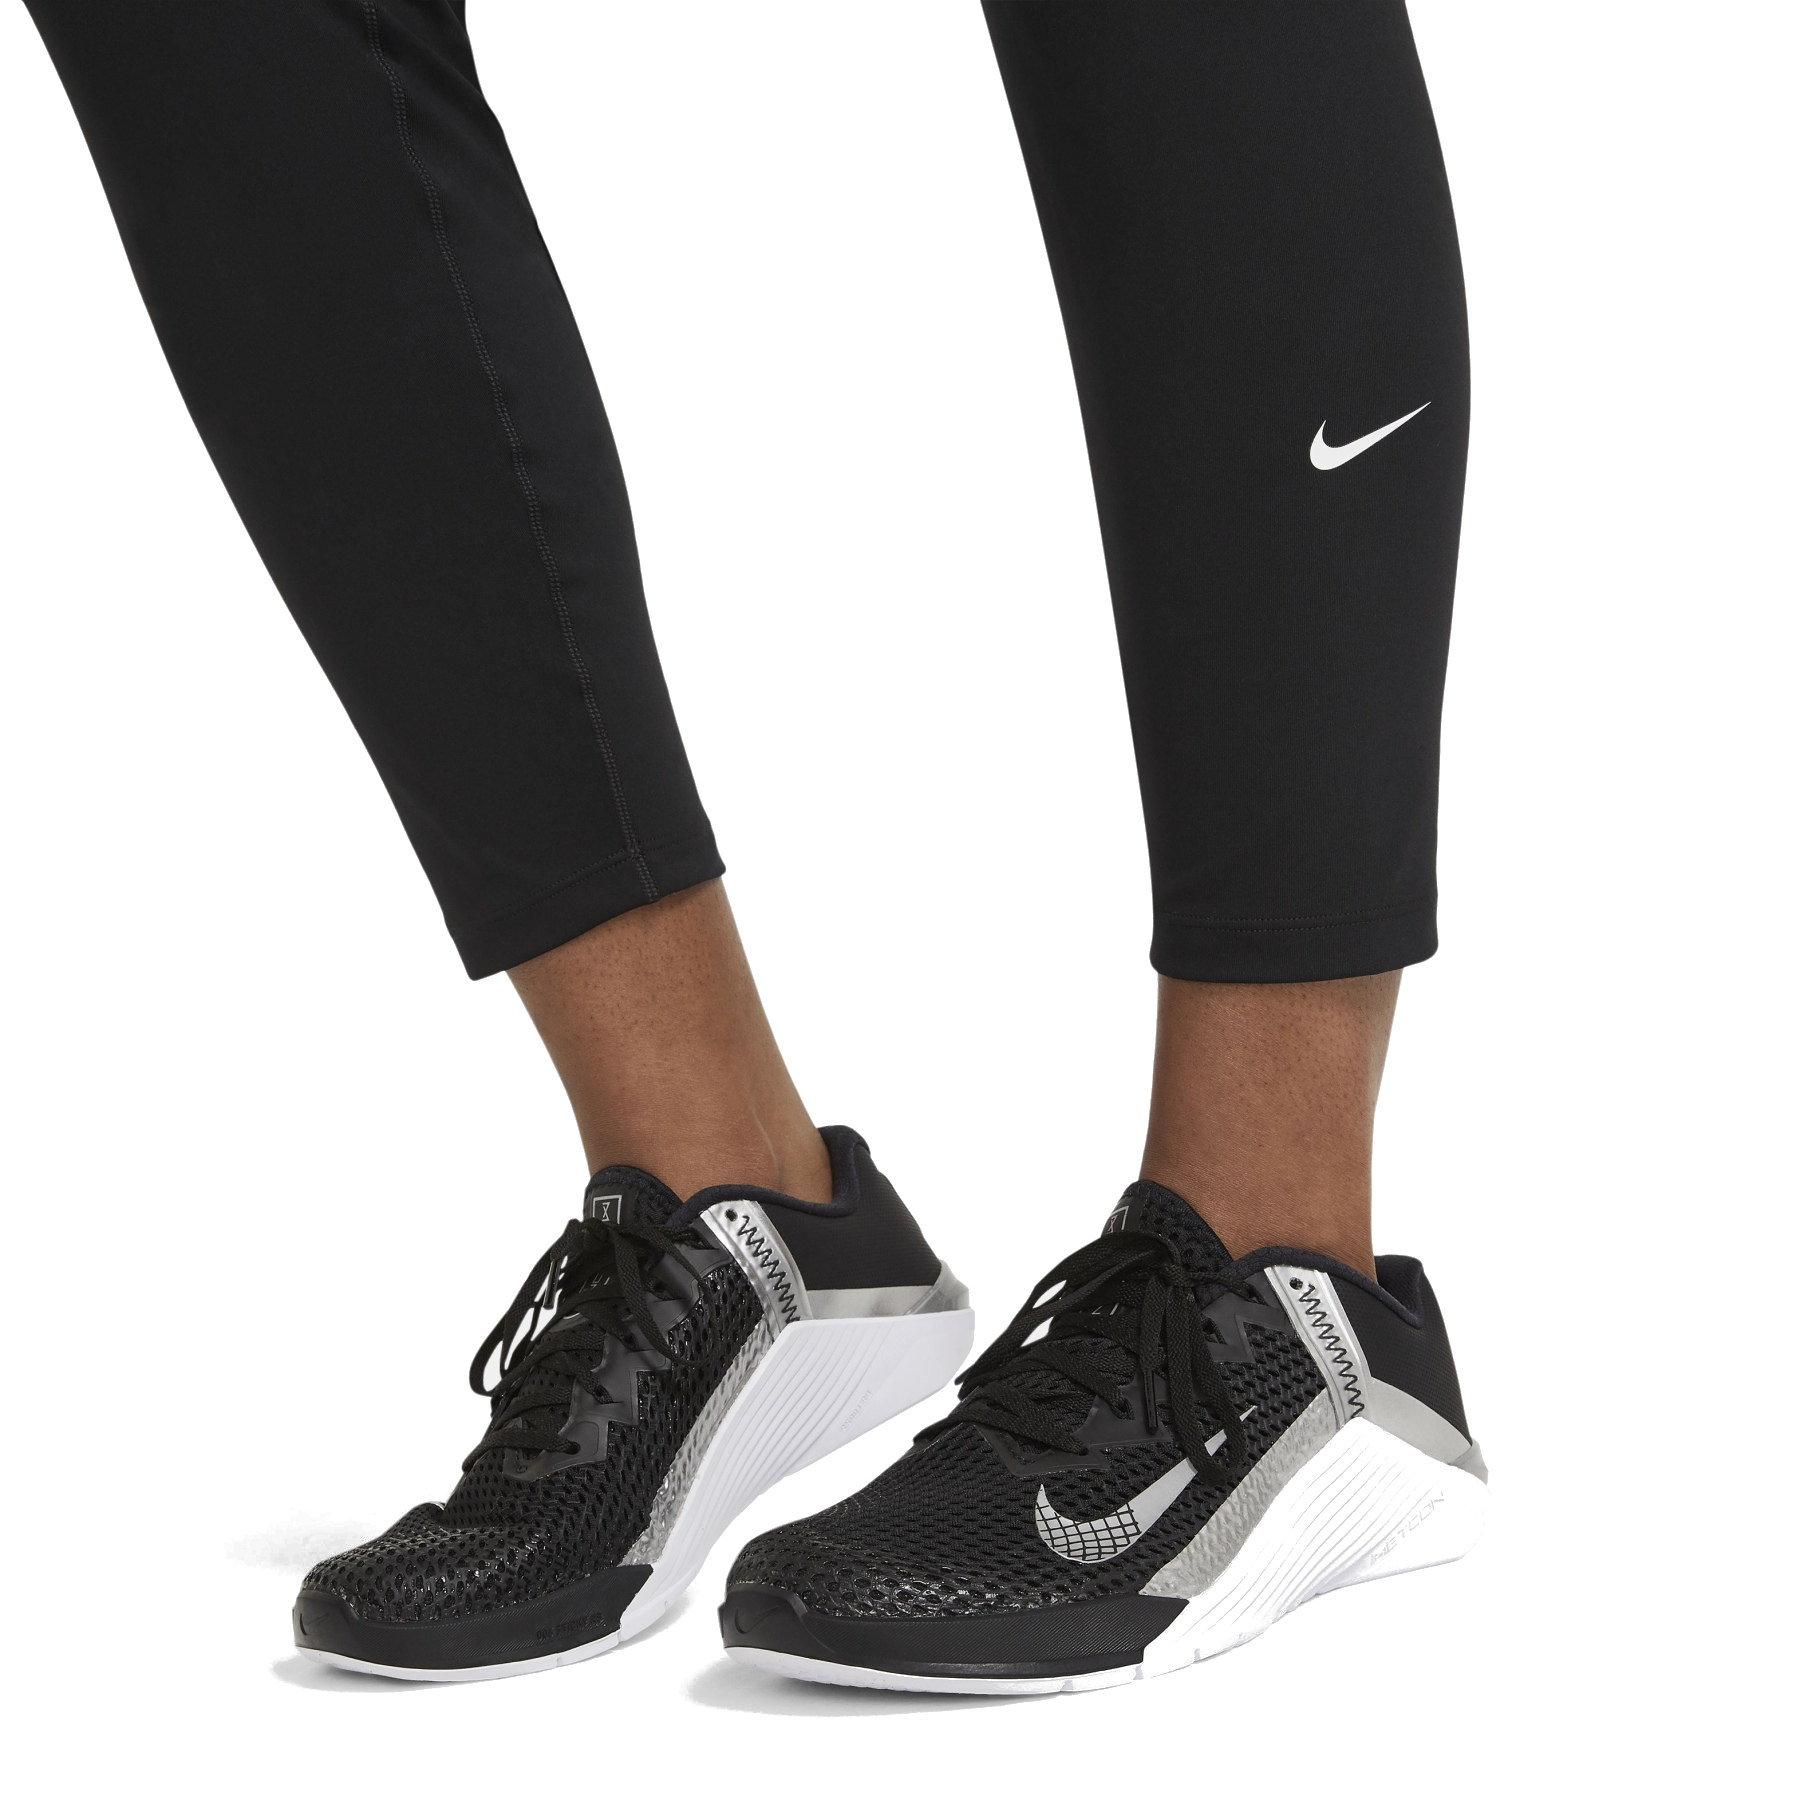 Legging taille mi-basse Nike One pour Femme